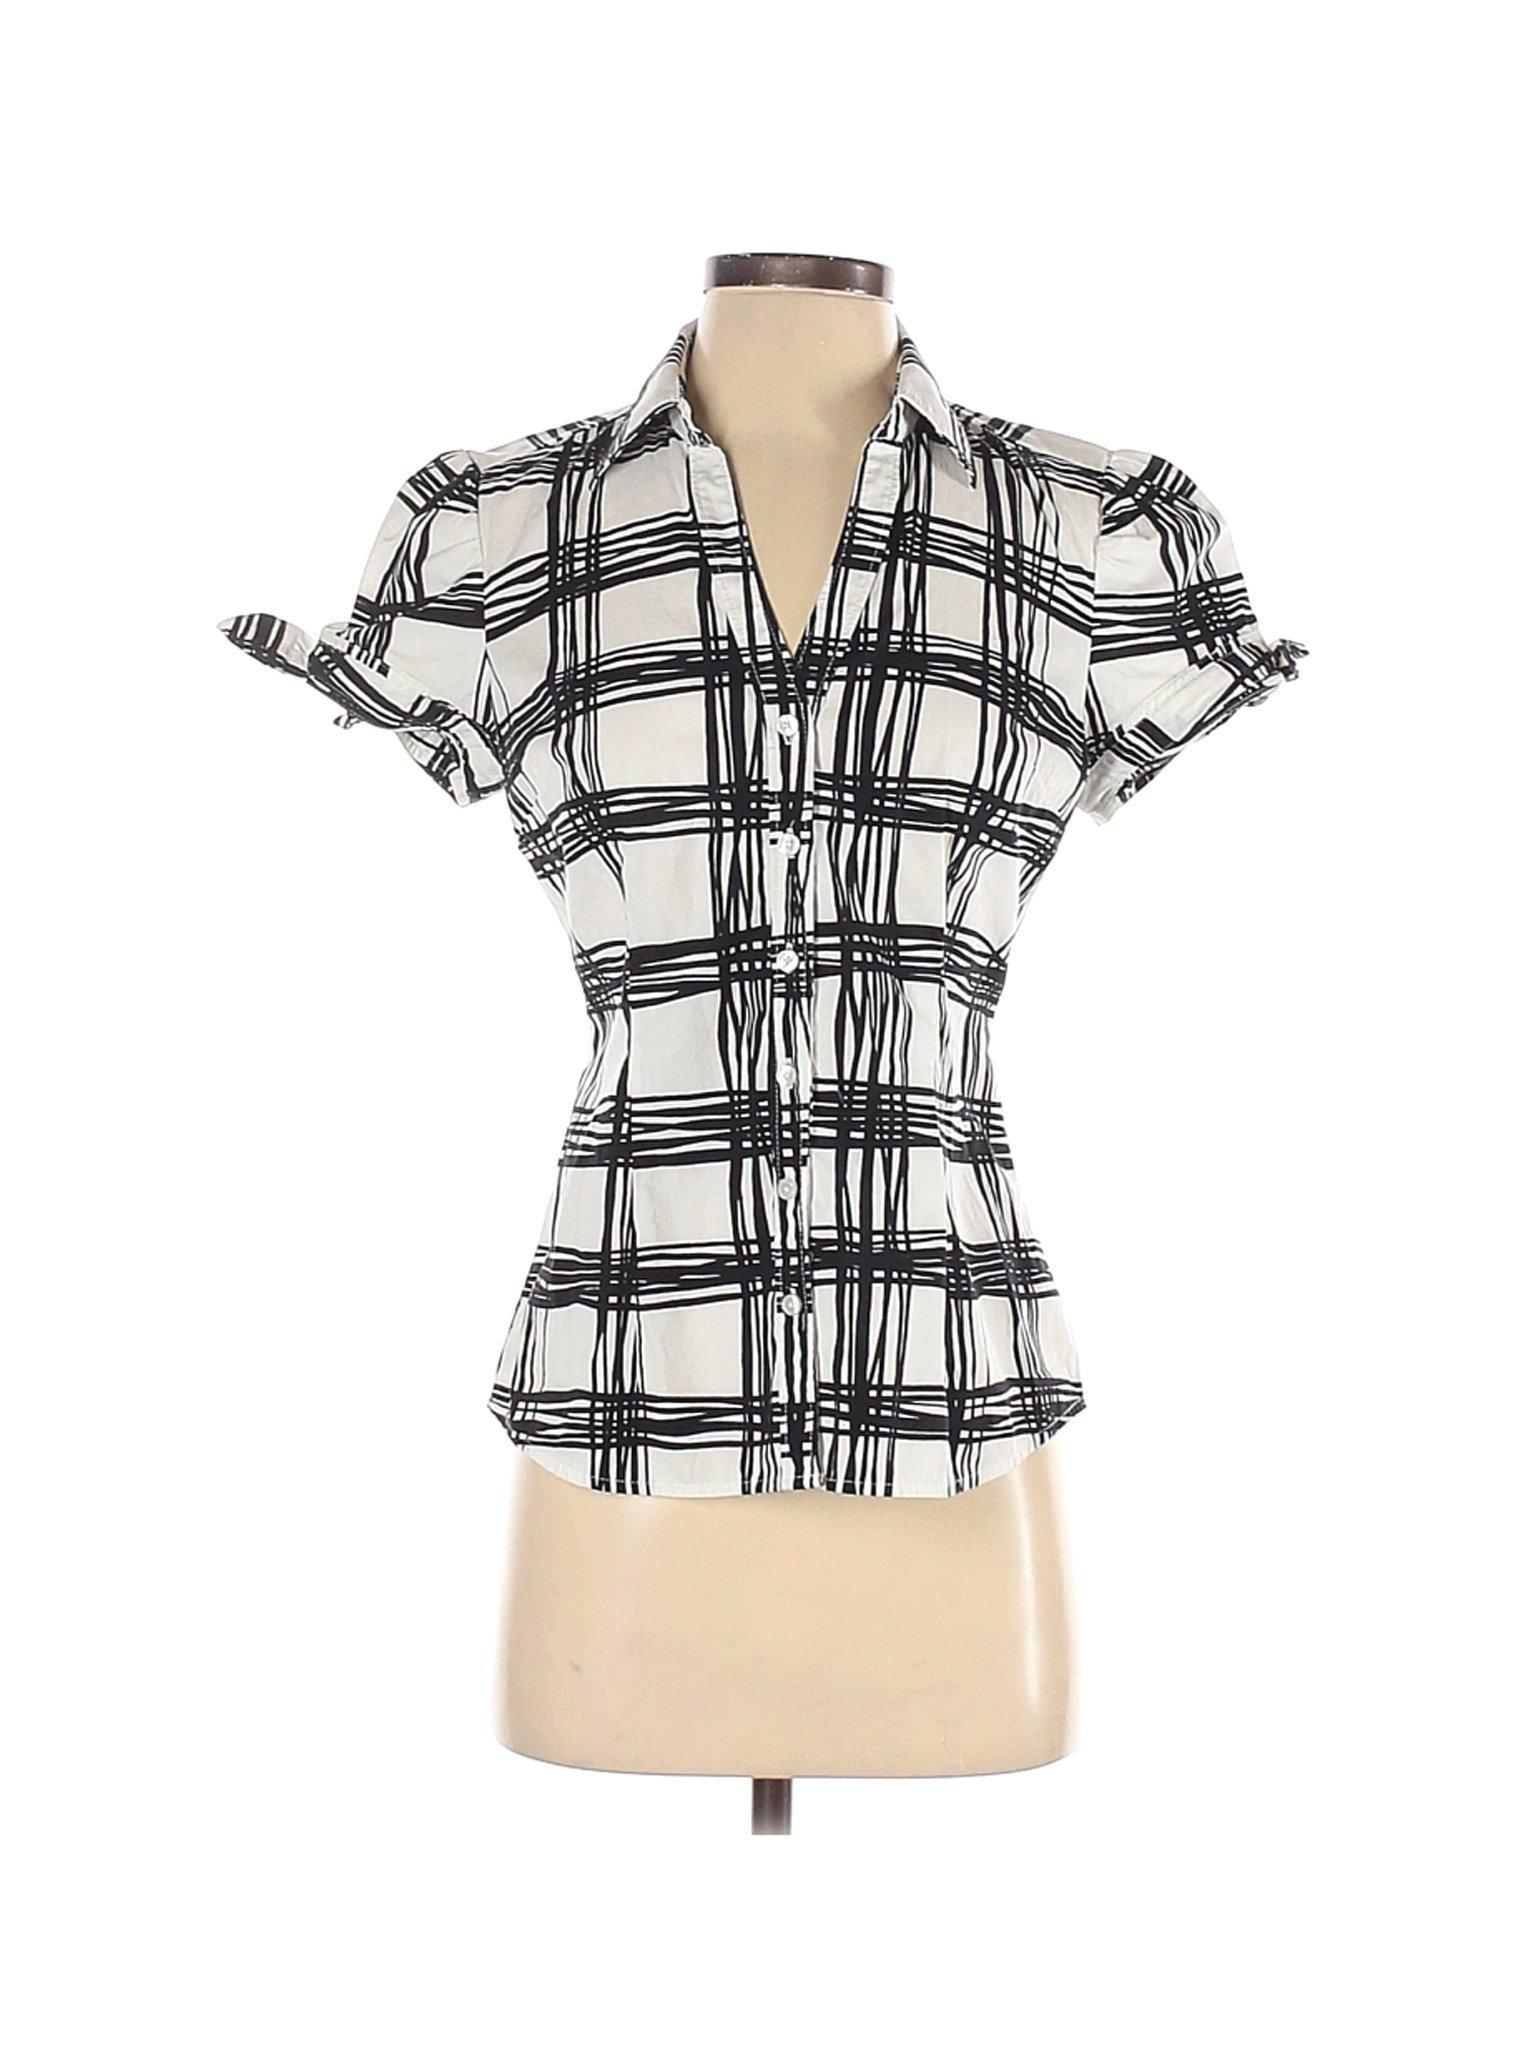 Express Design Studio Women White Short Sleeve Button-Down Shirt S | eBay